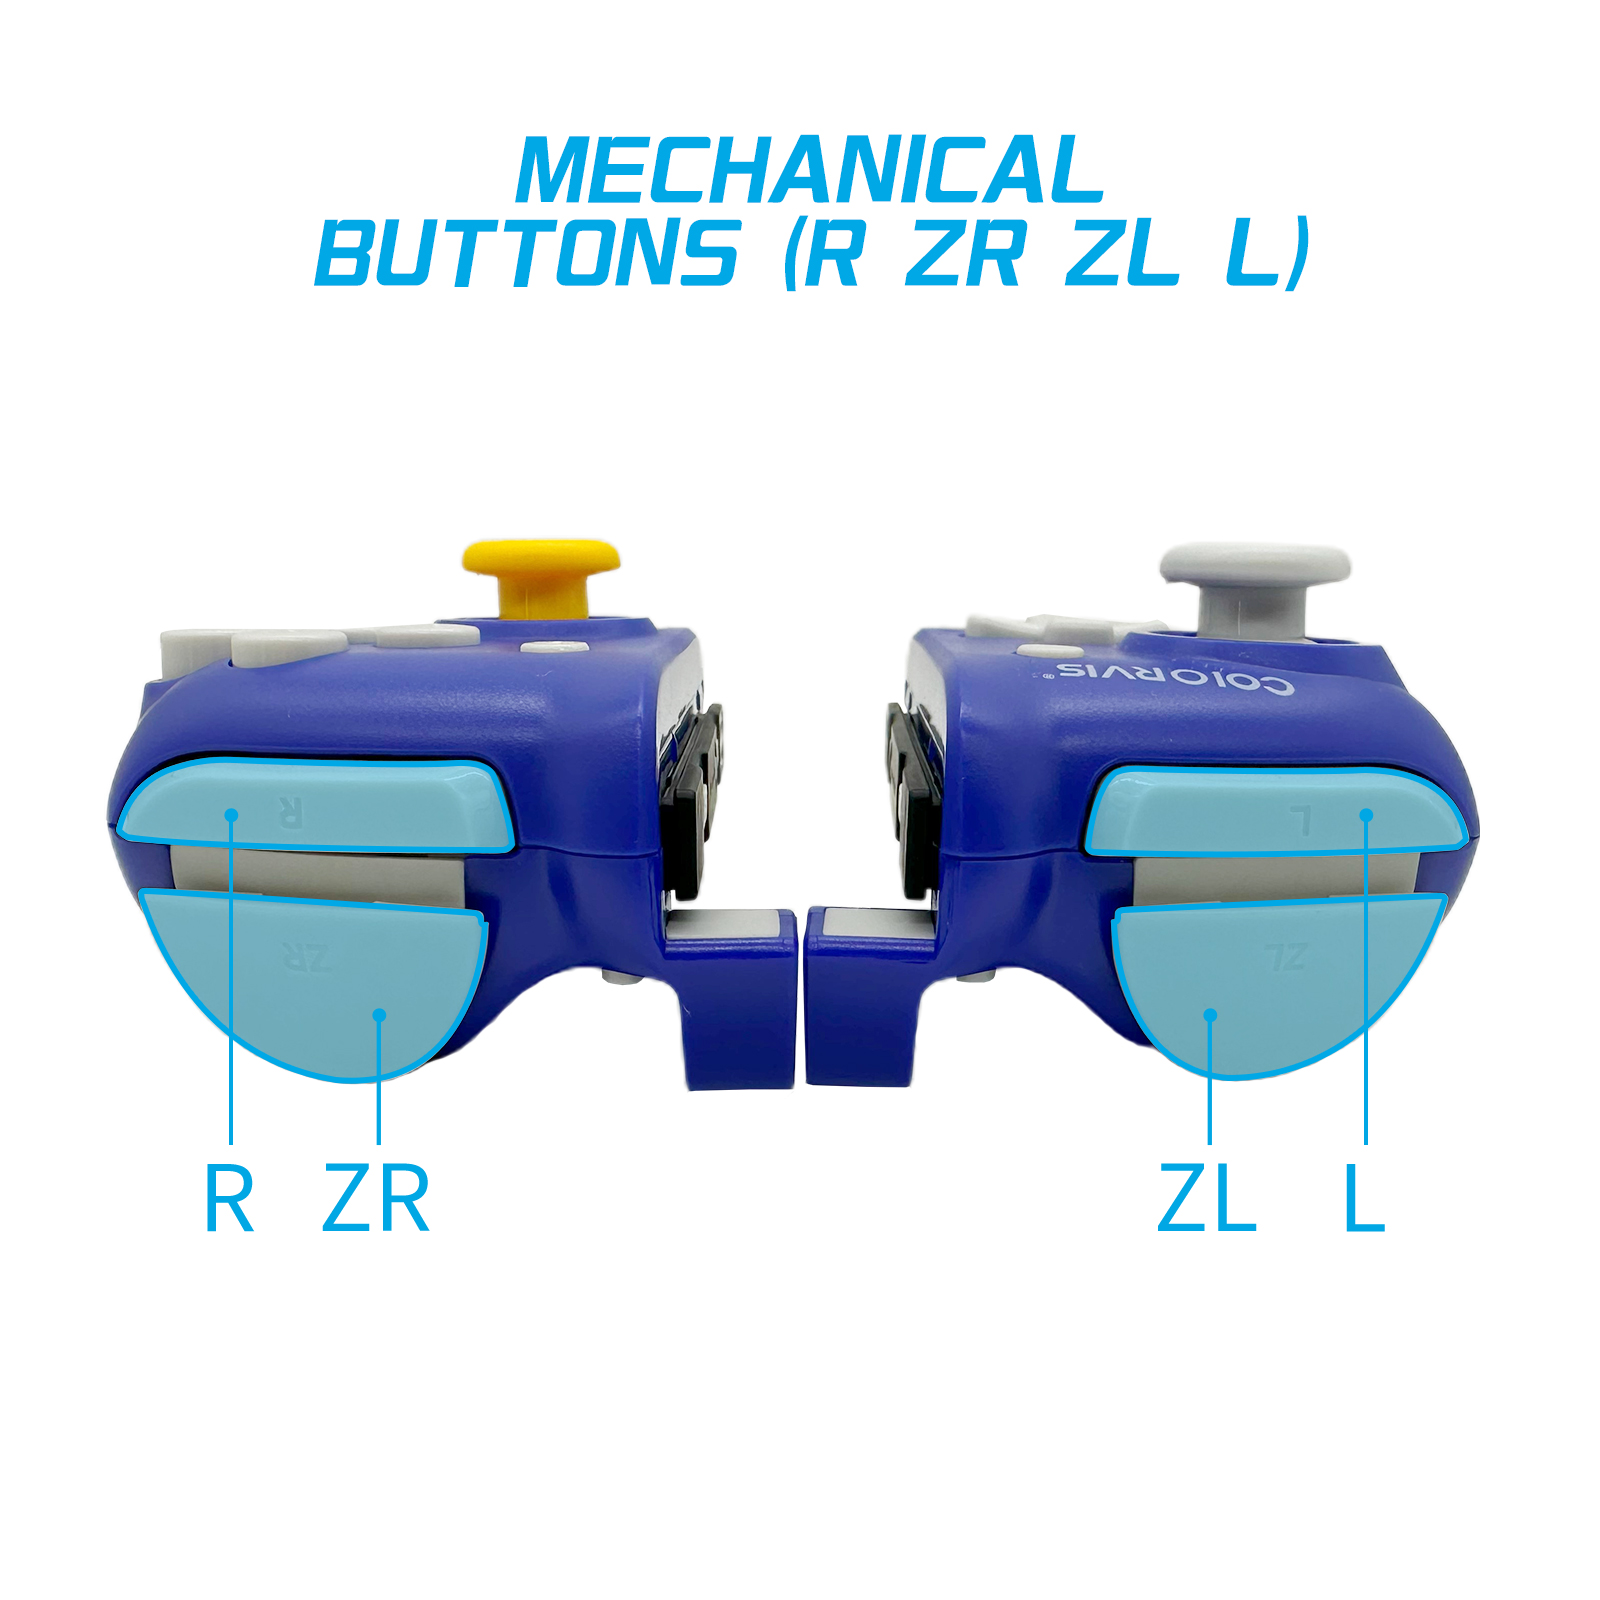 4 Mechanical buttons: ZR/ZL R/L